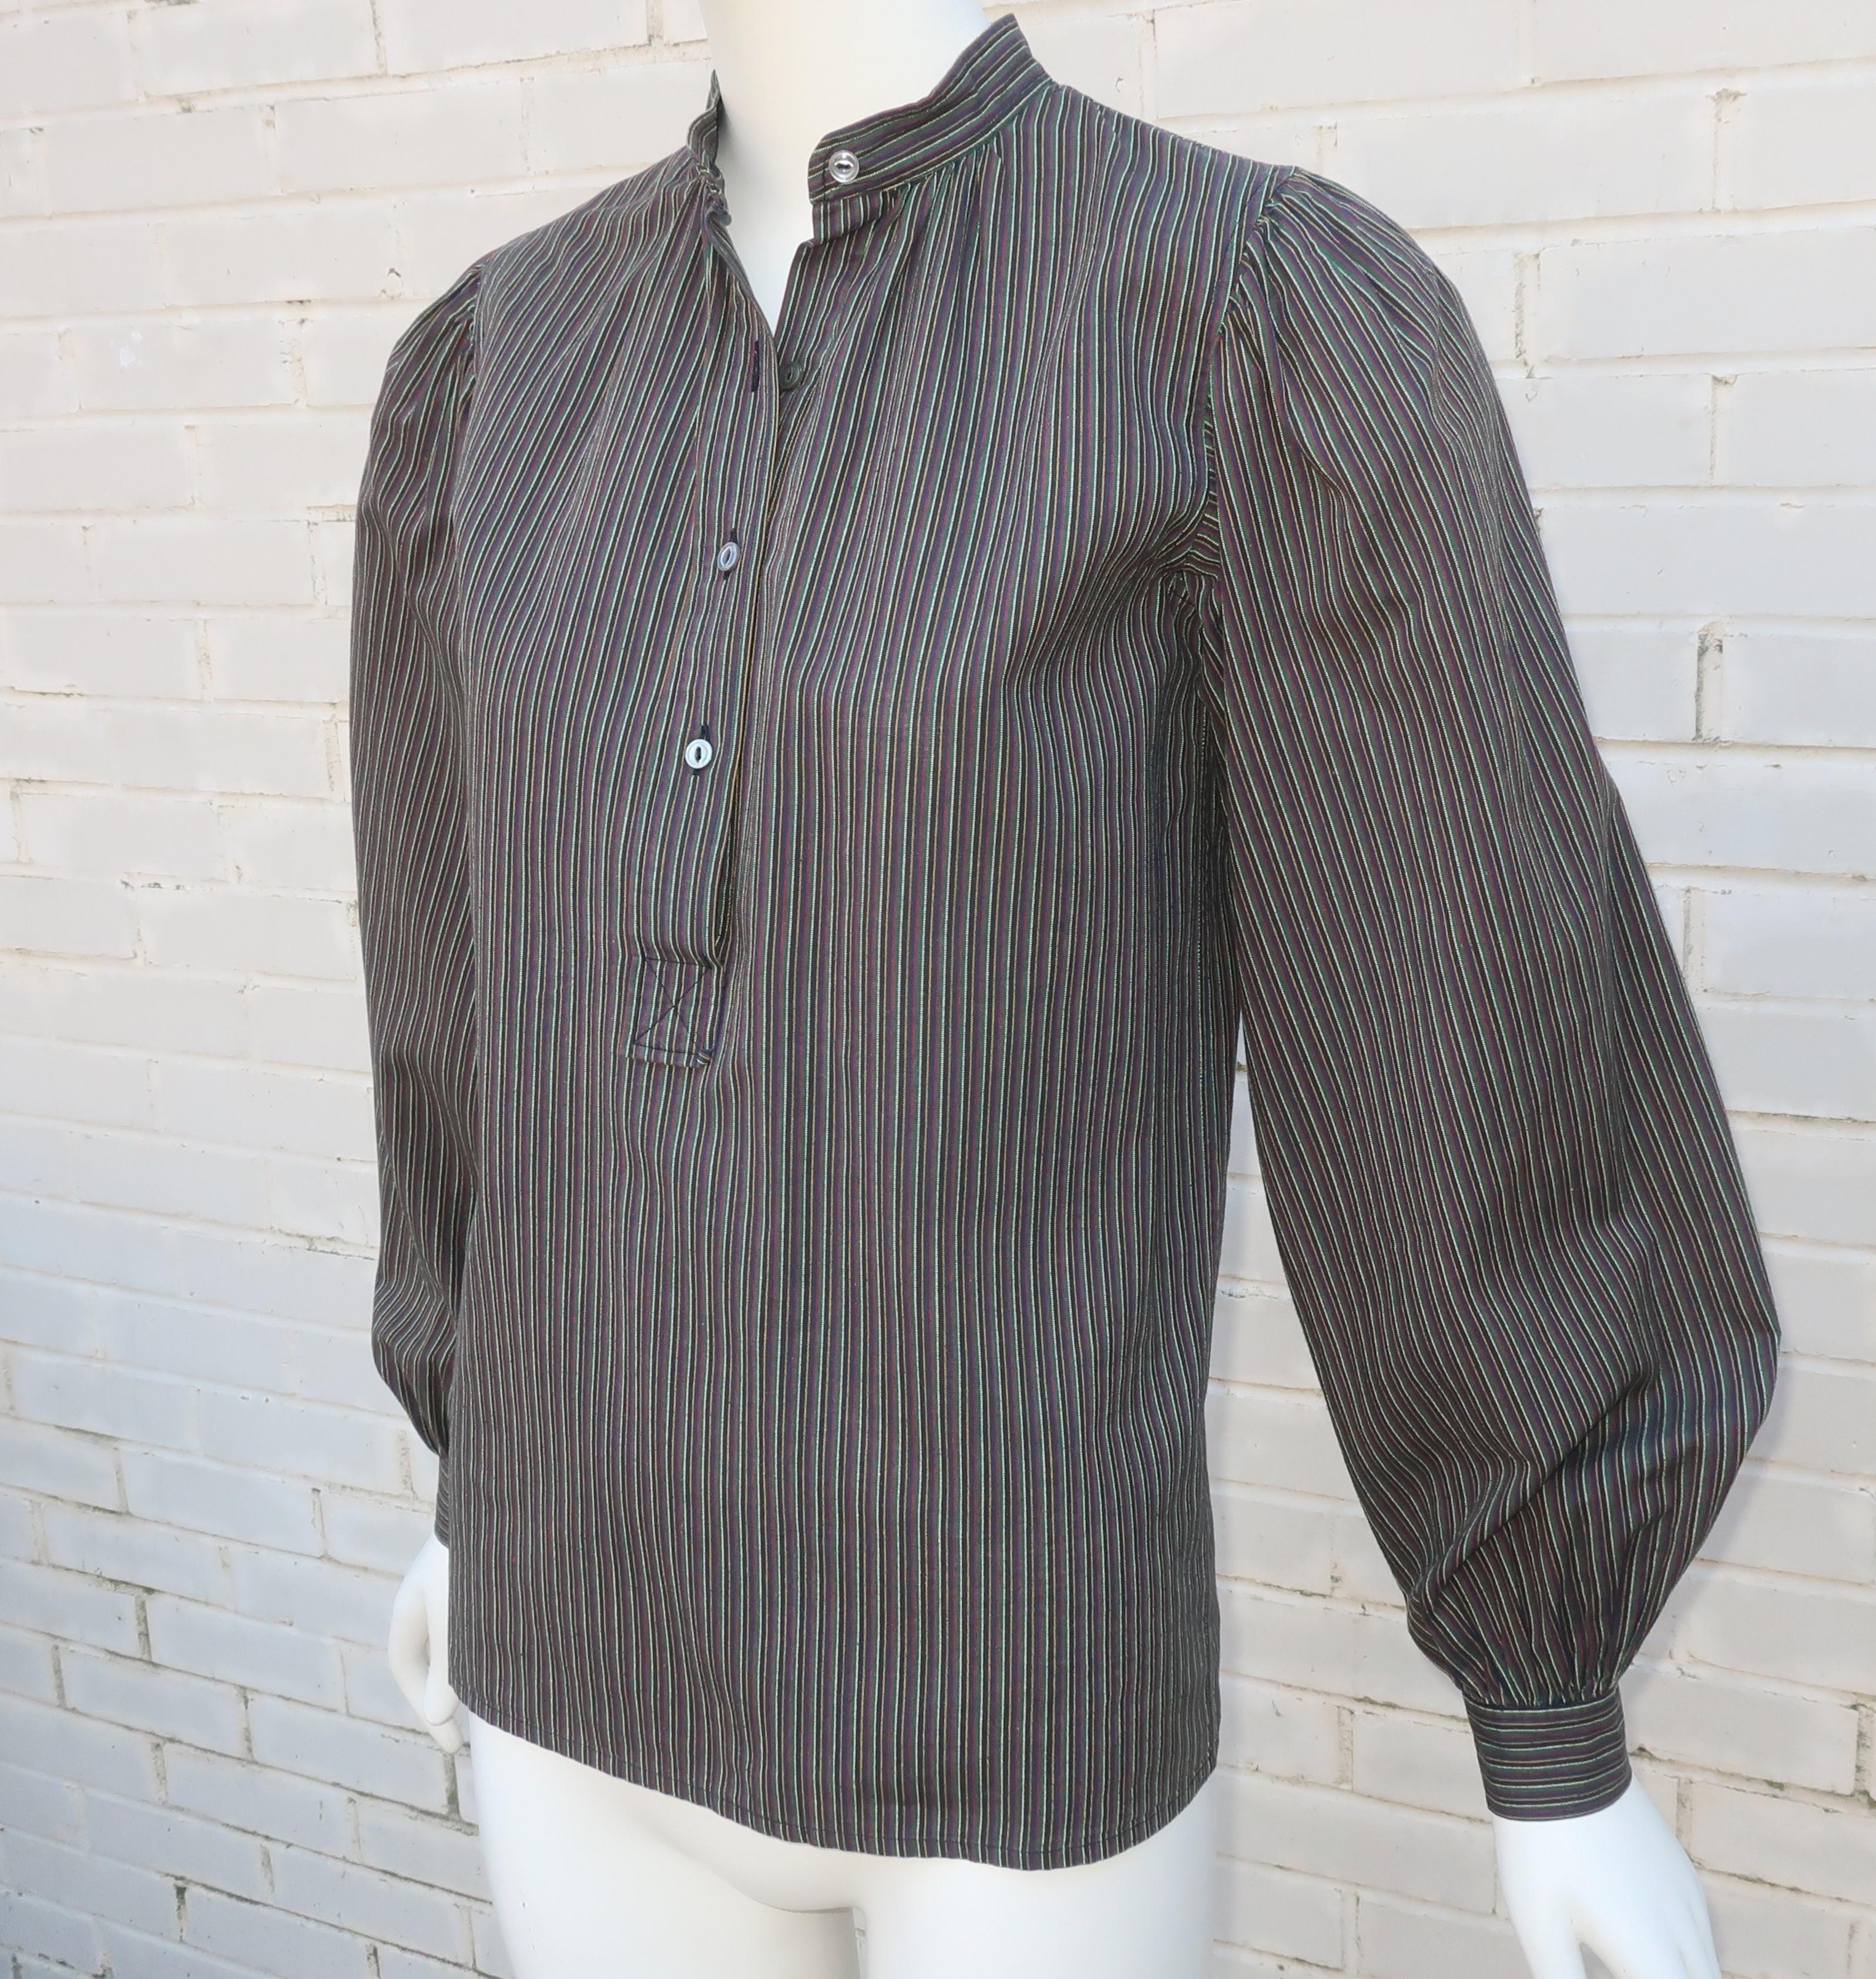 Yves Saint Laurent Striped Cotton Peasant Style Blouse, 1970's For Sale 1